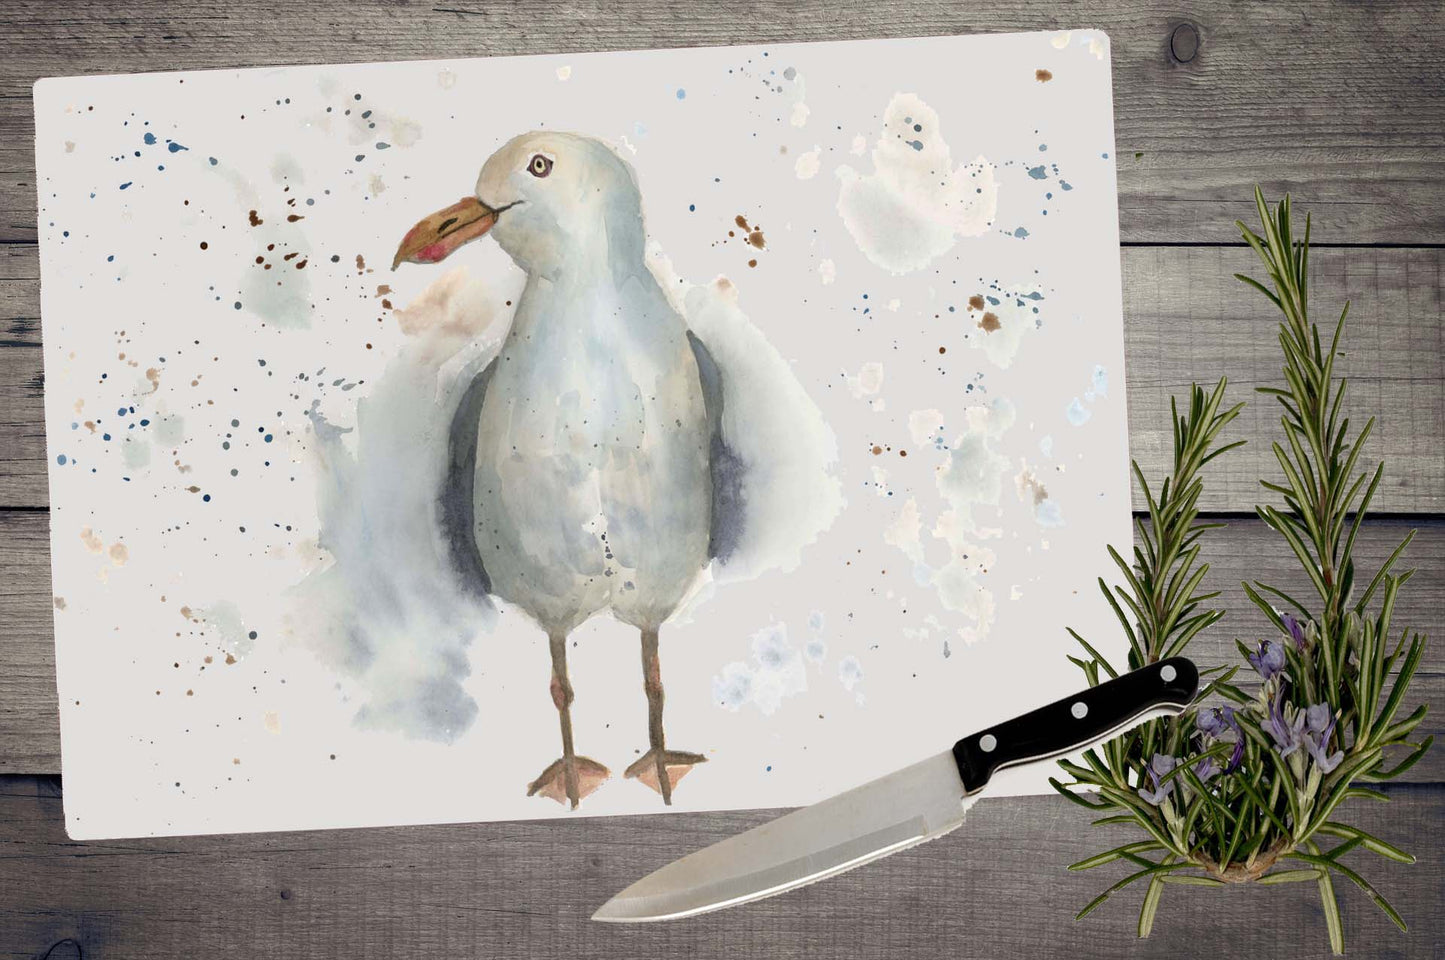 Seagull chopping board / Worktop saver